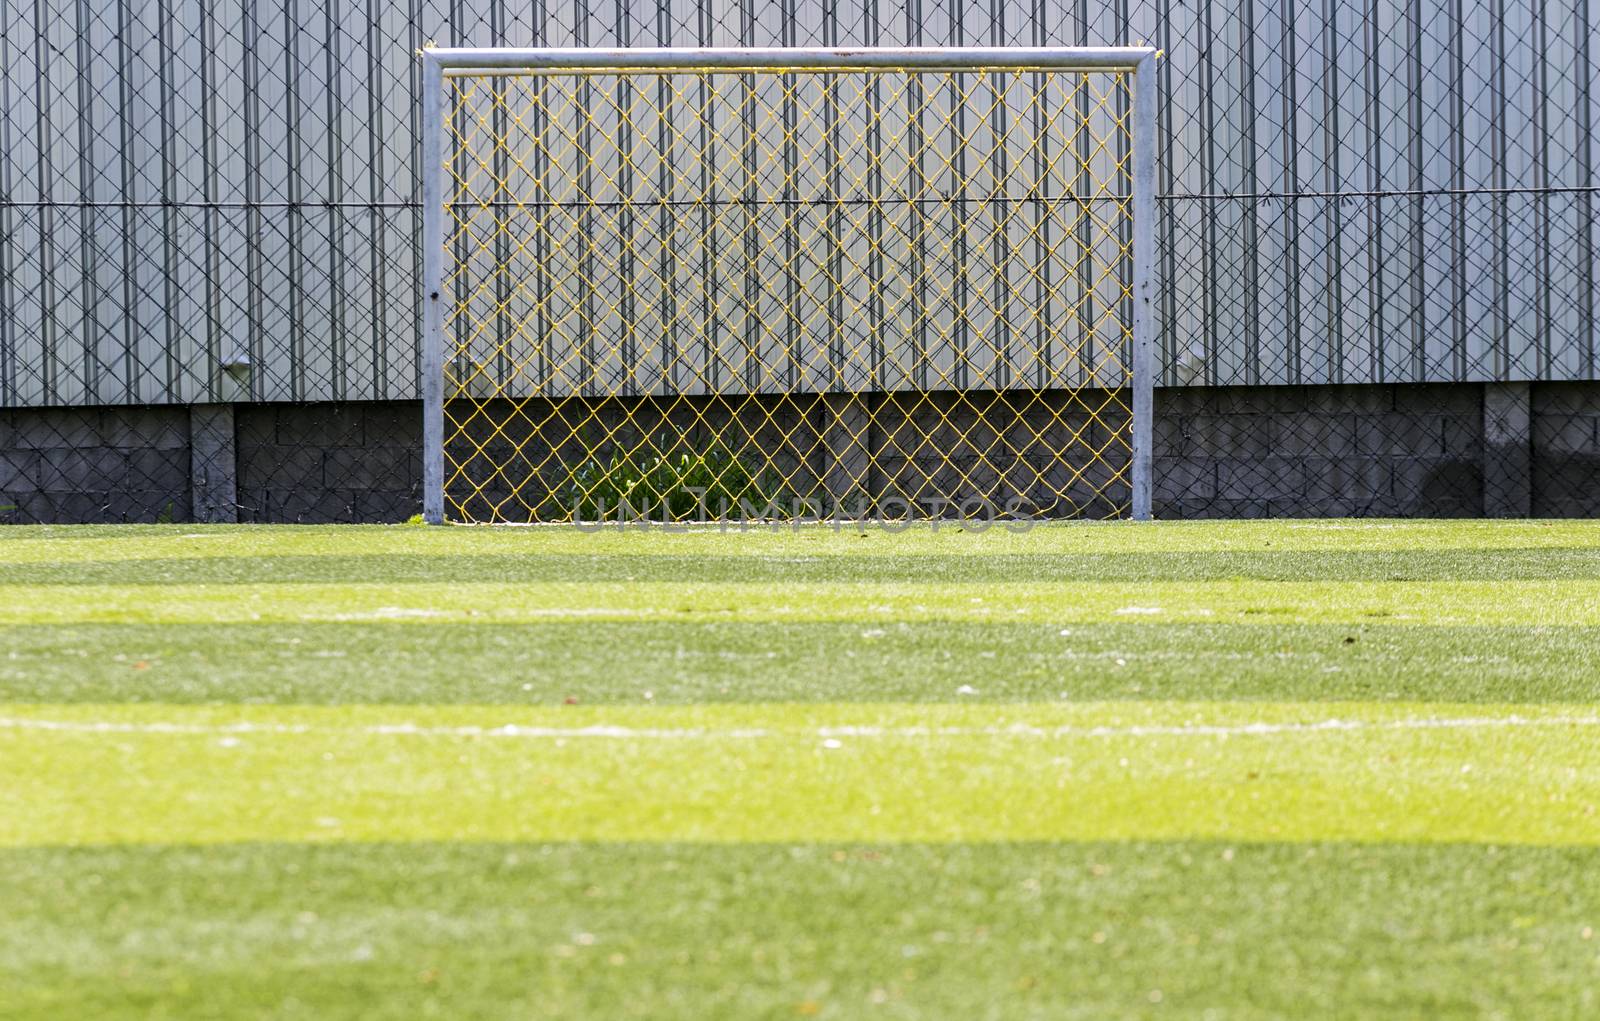 Goal soccer green field background